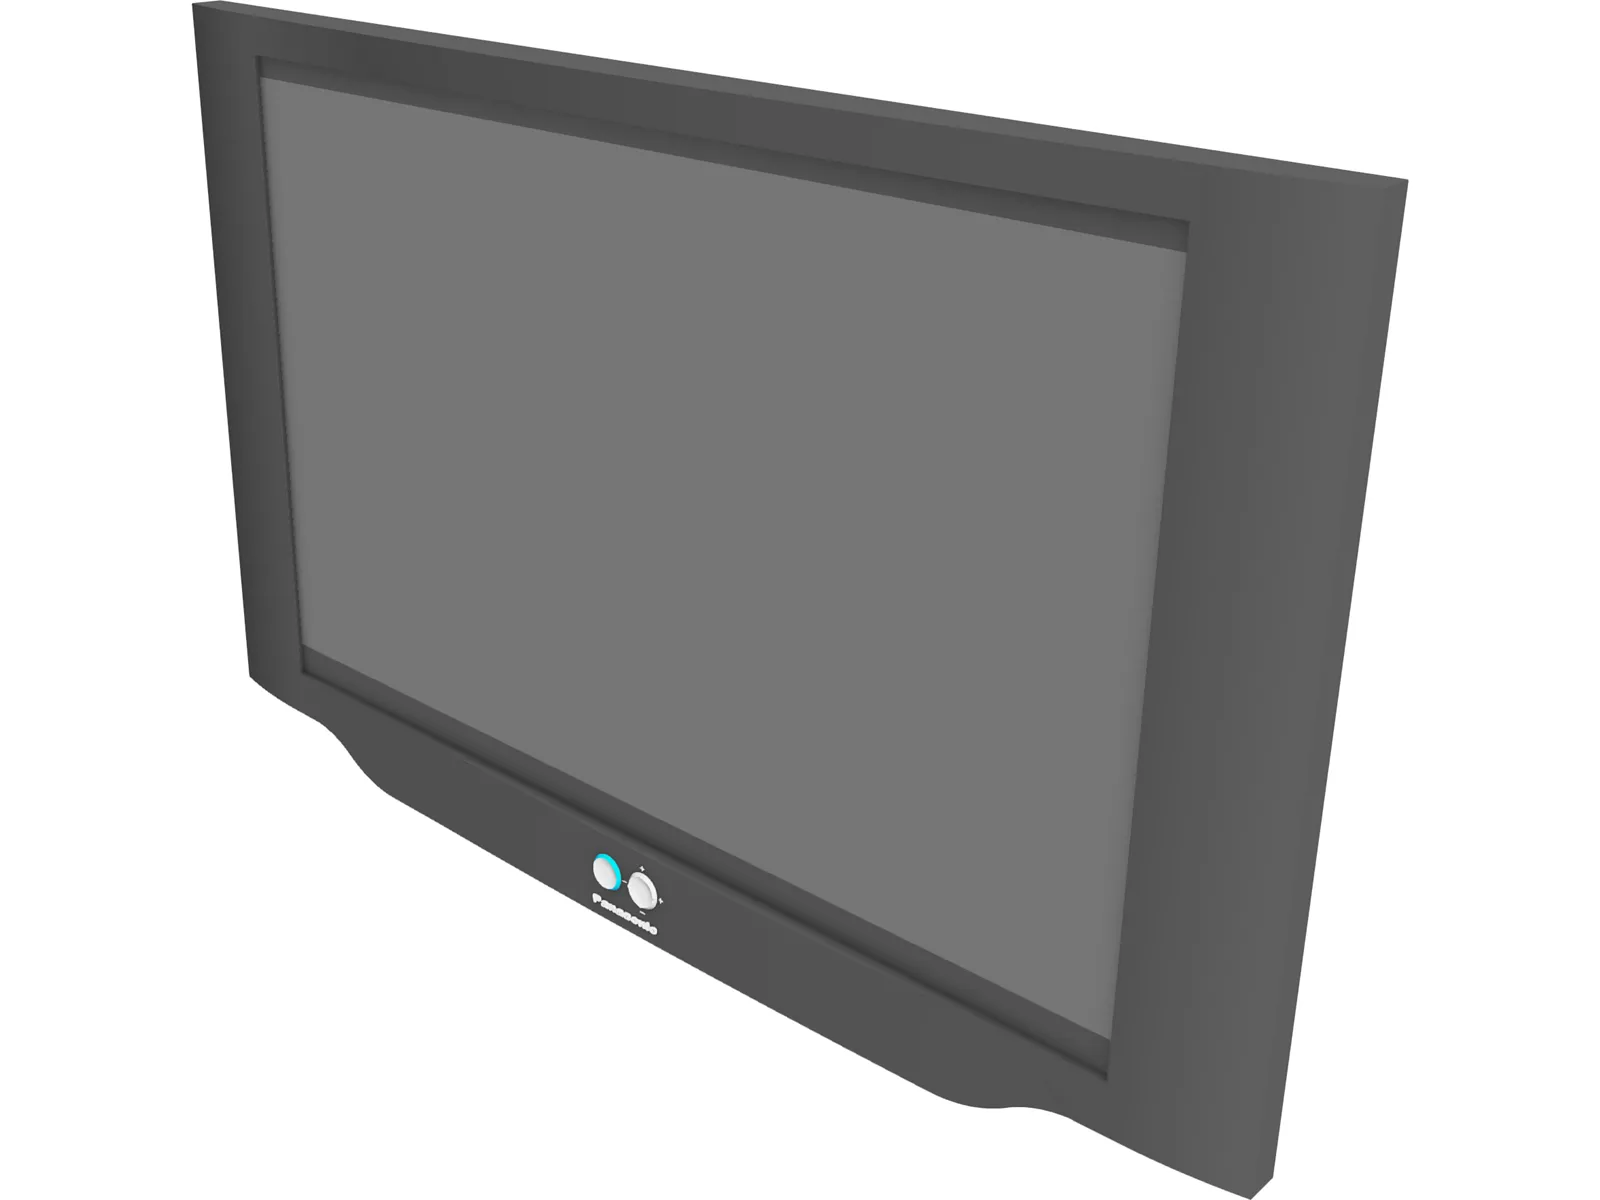 Panasonic Plasma TV 3D Model